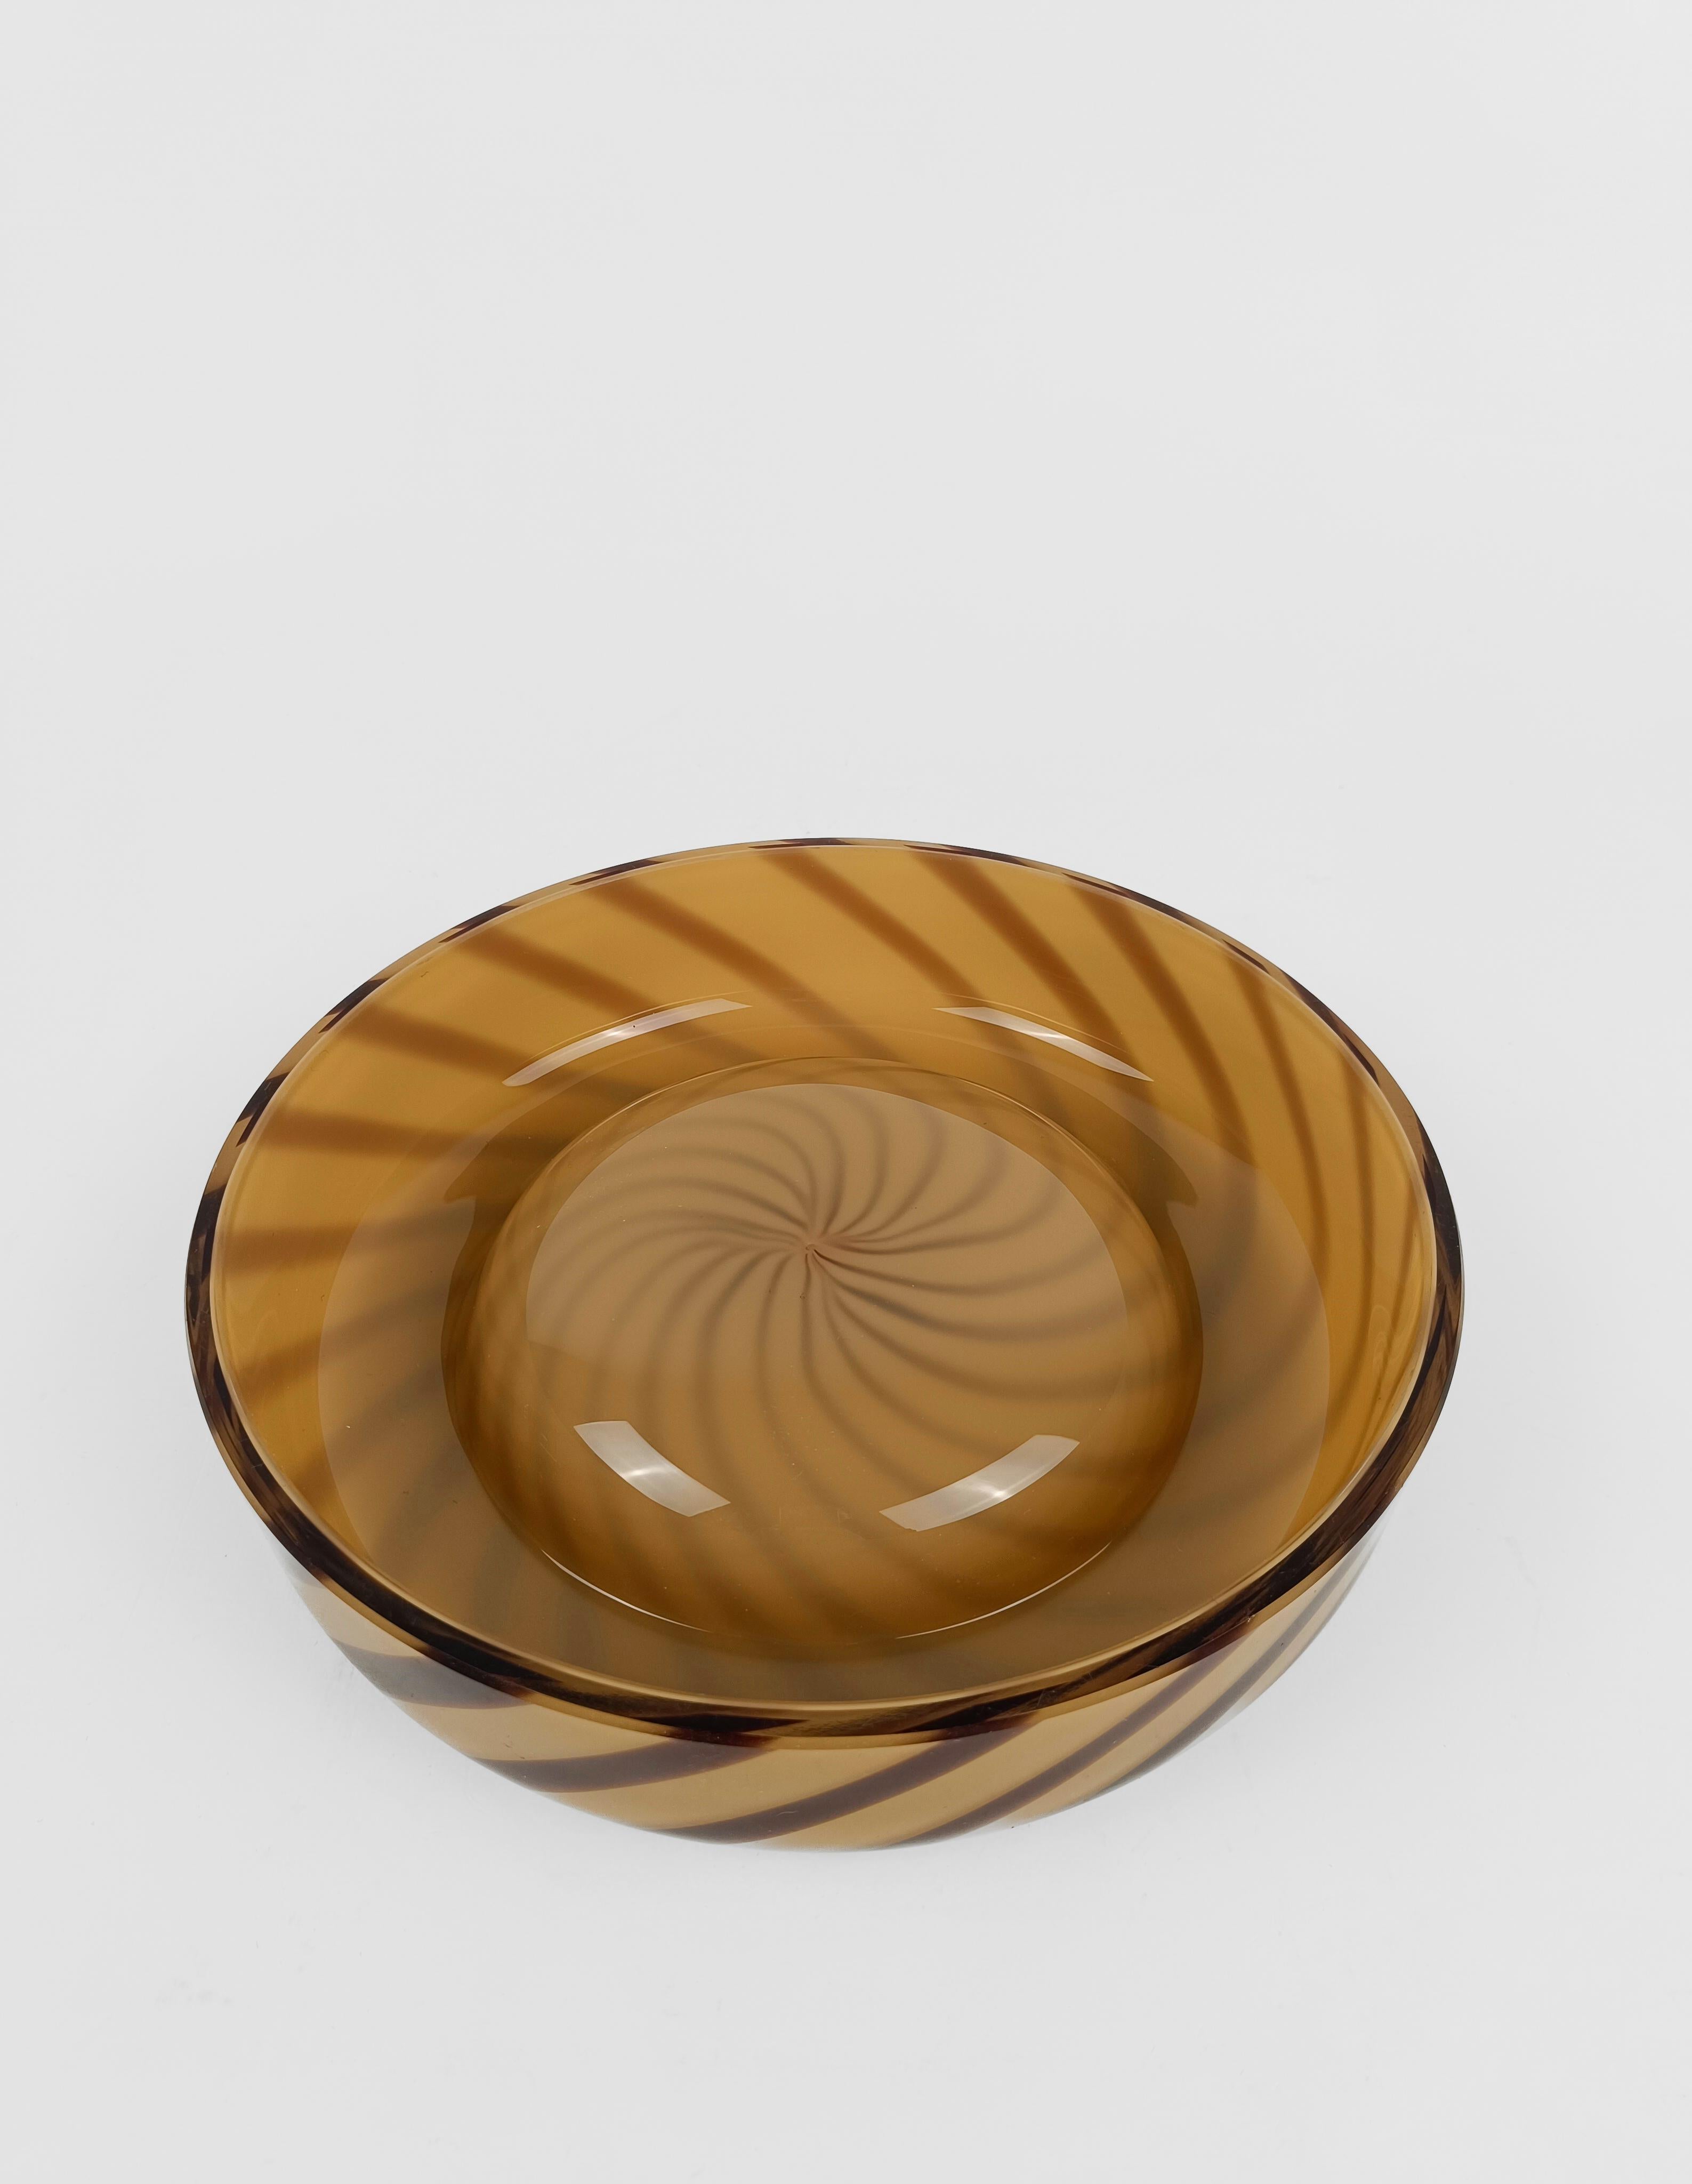 A Vintage Vide-Poche / Decorative Bowl in Cream and Burgundy Murano Glass 1970s  For Sale 2